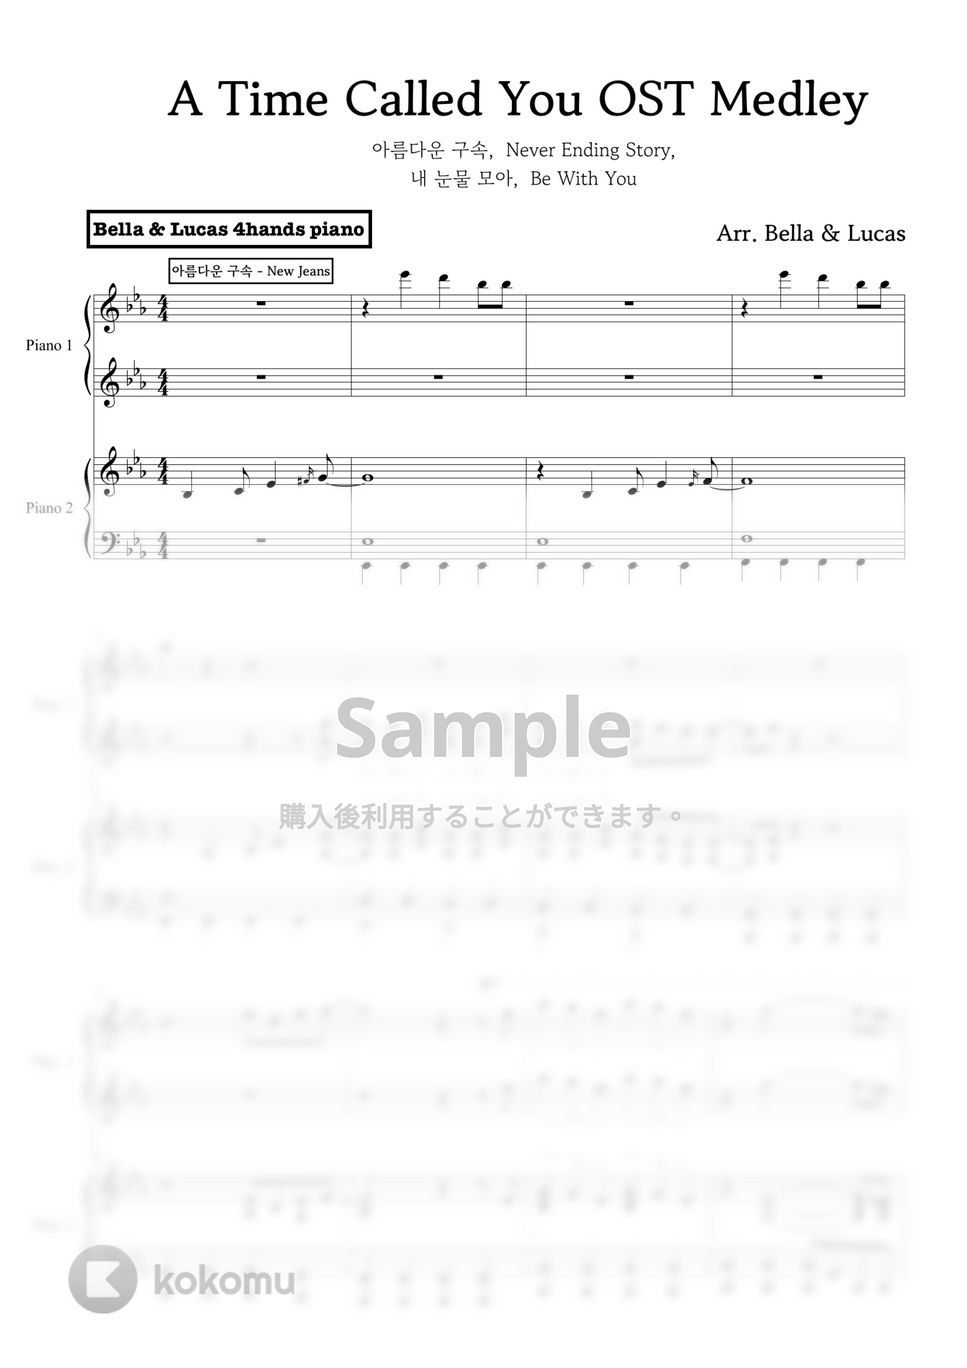 OST Medley - いつかの君に メドレー by BELLA&LUCAS